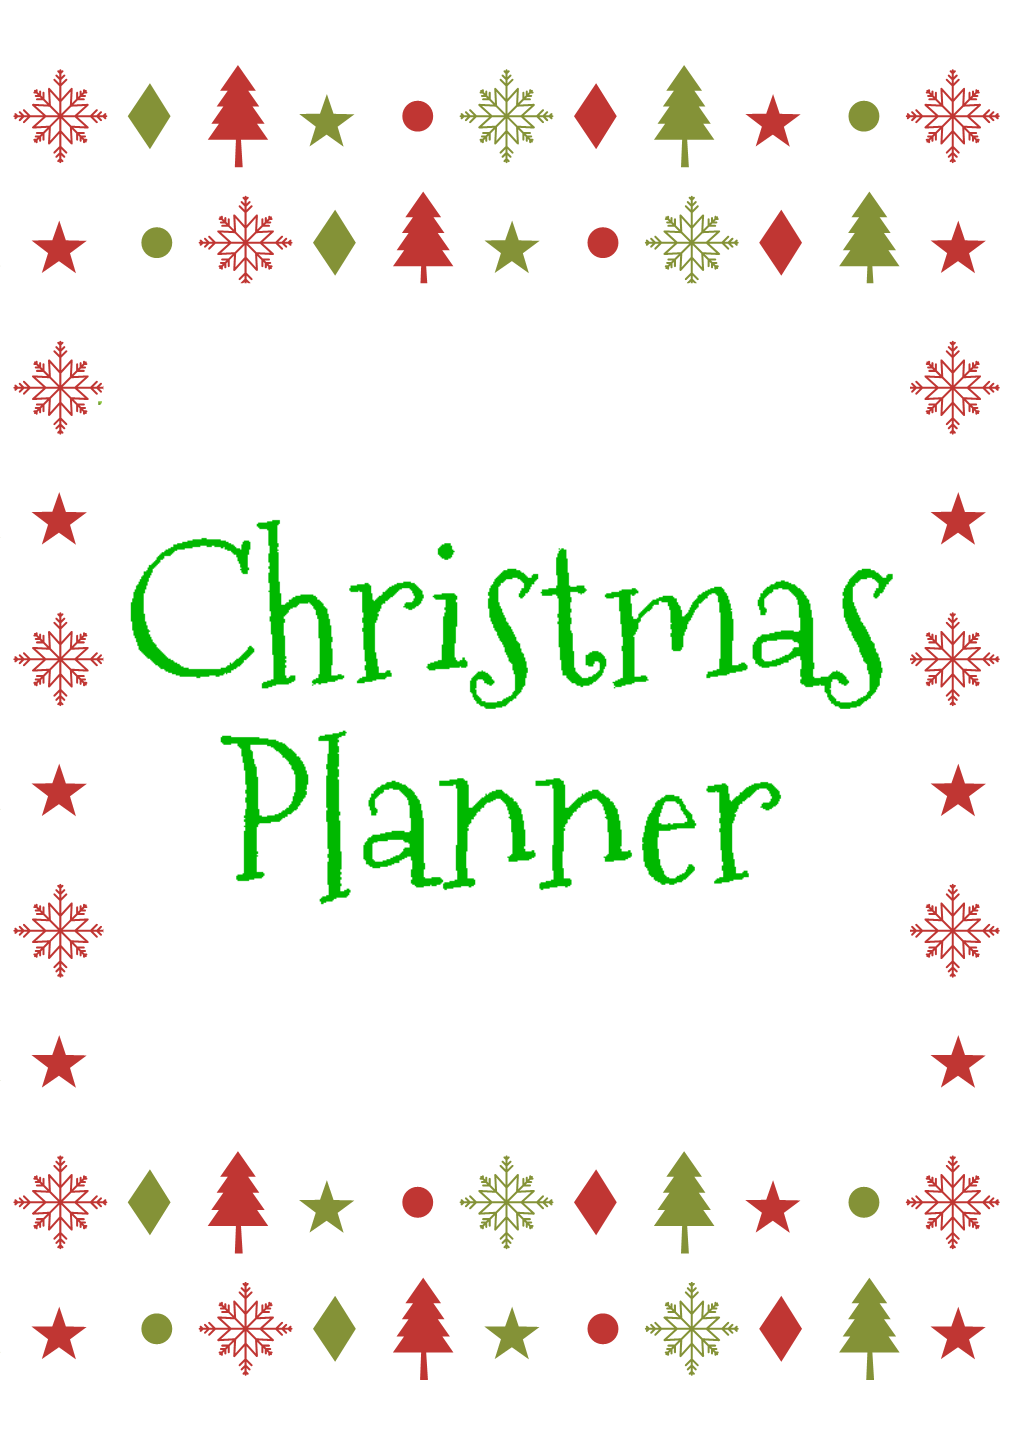 FREE Christmas Planner